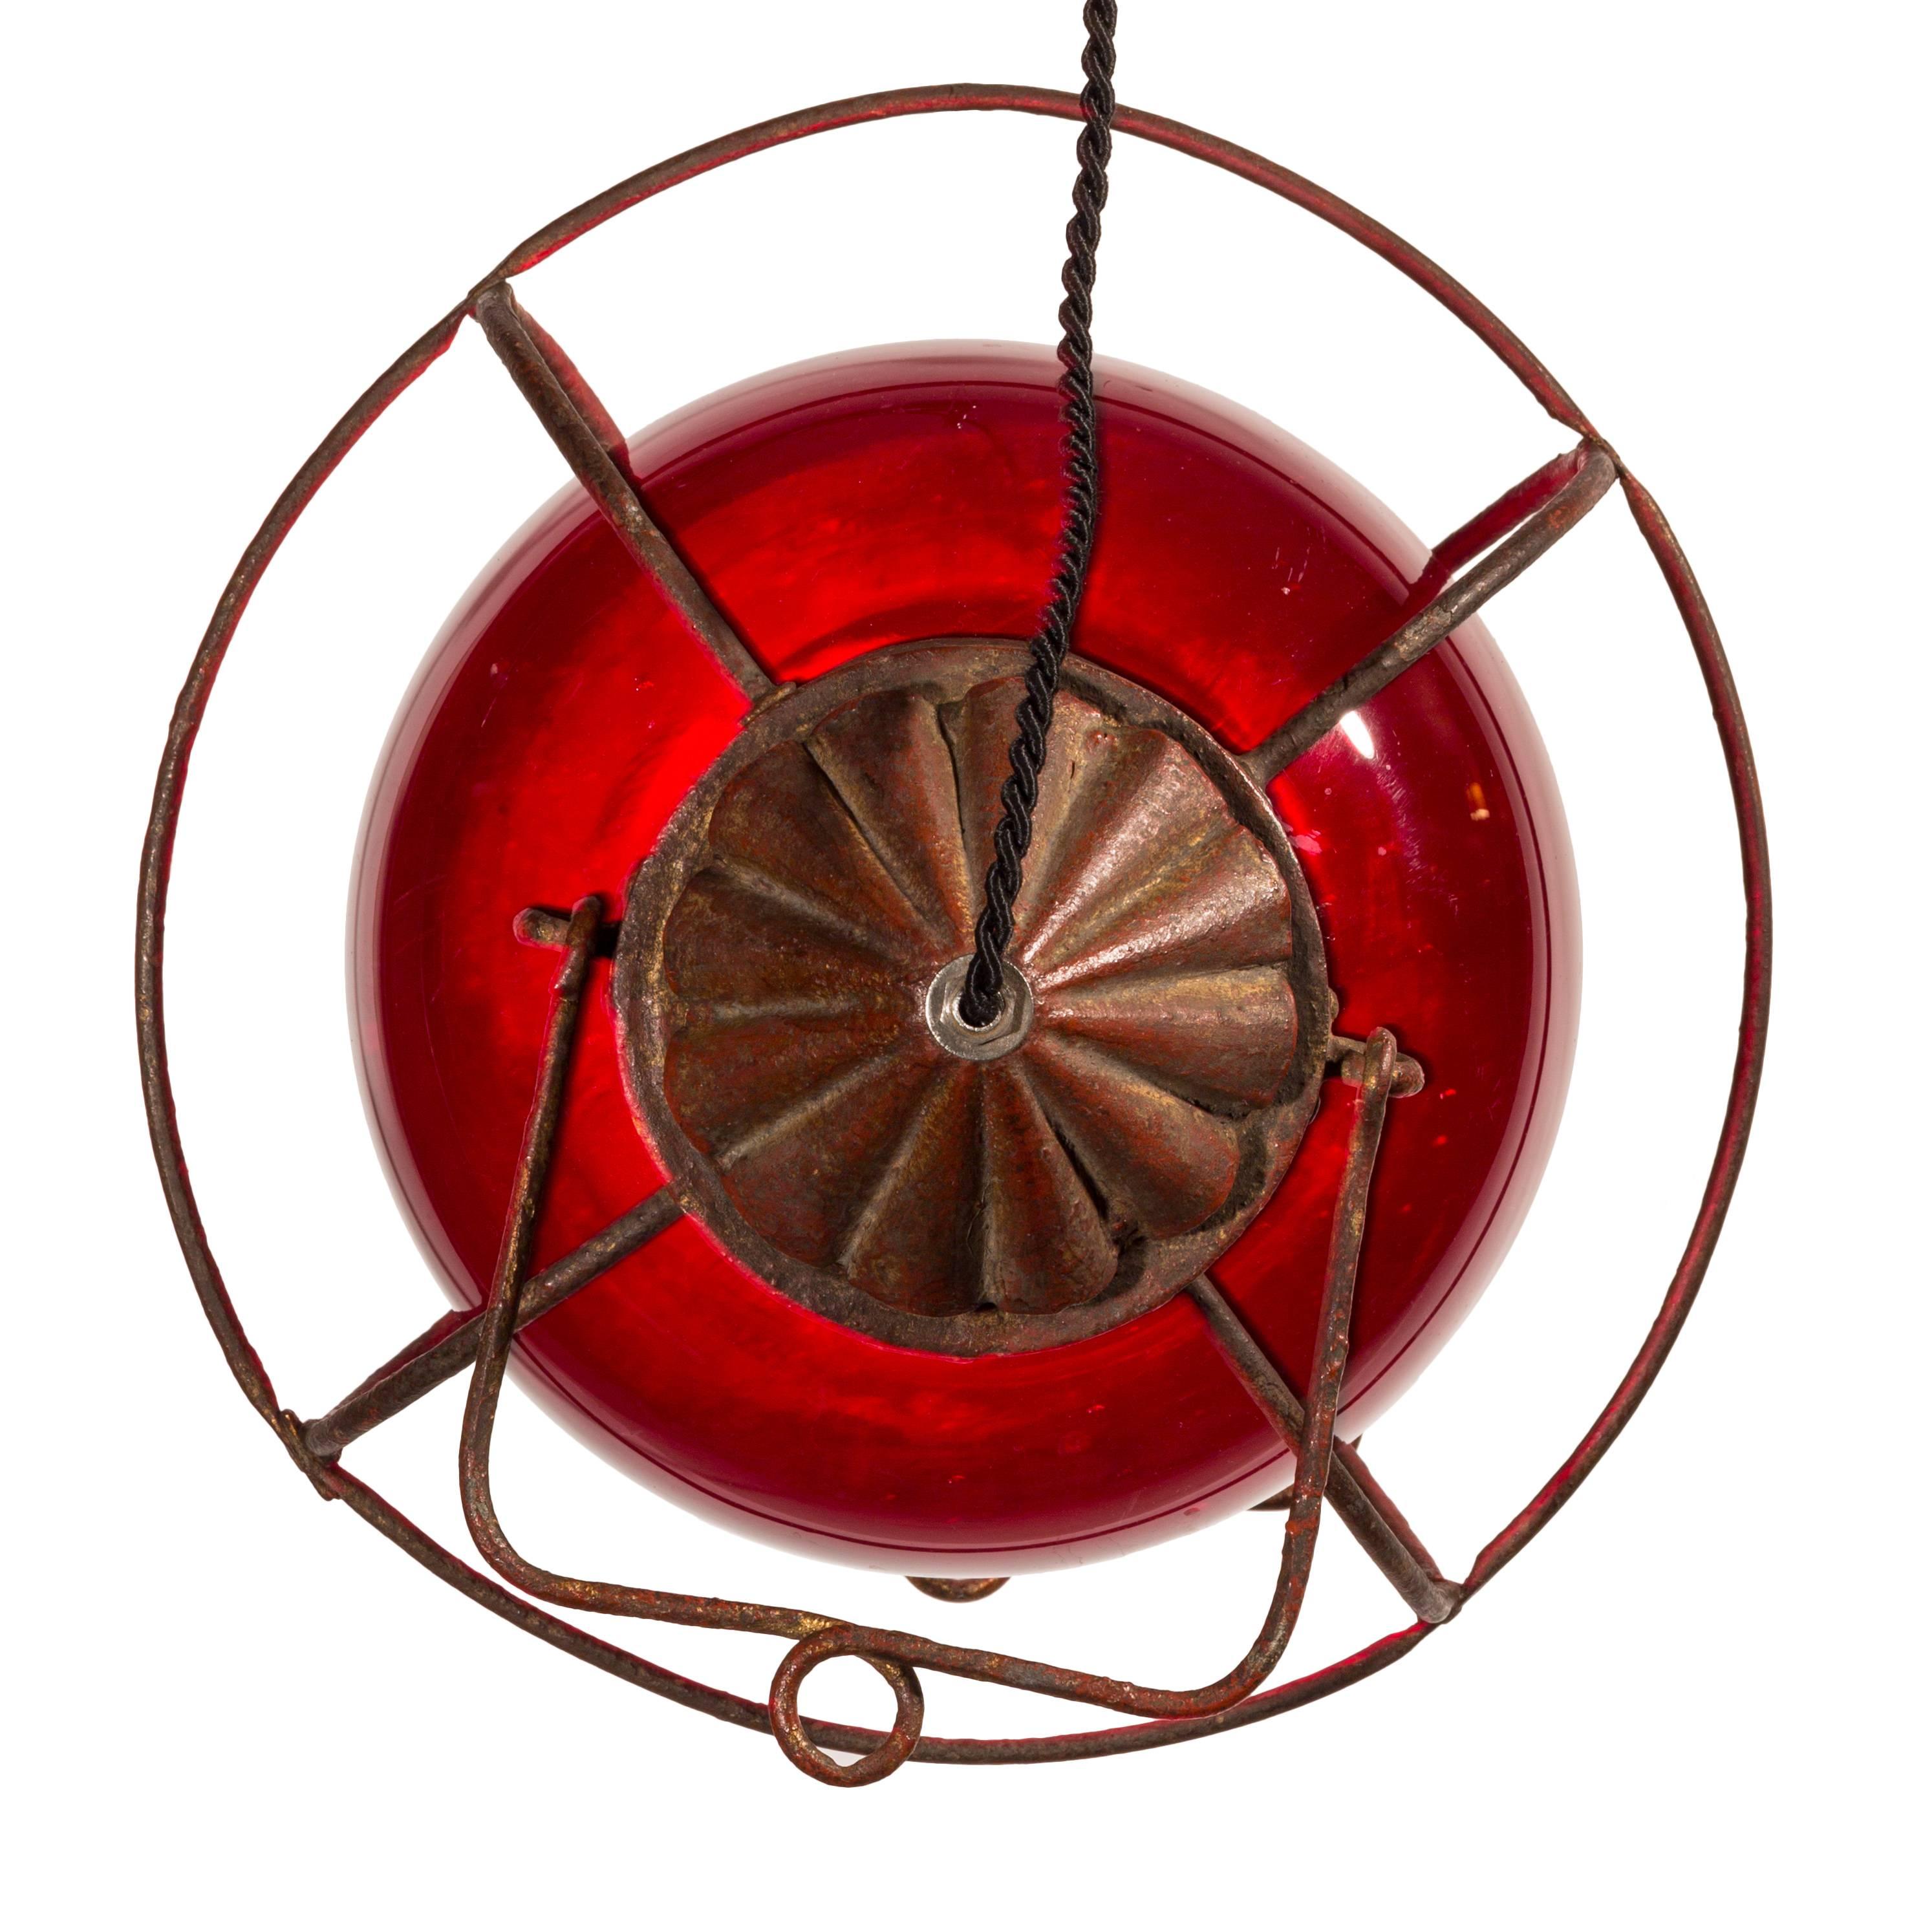 red oil lamp